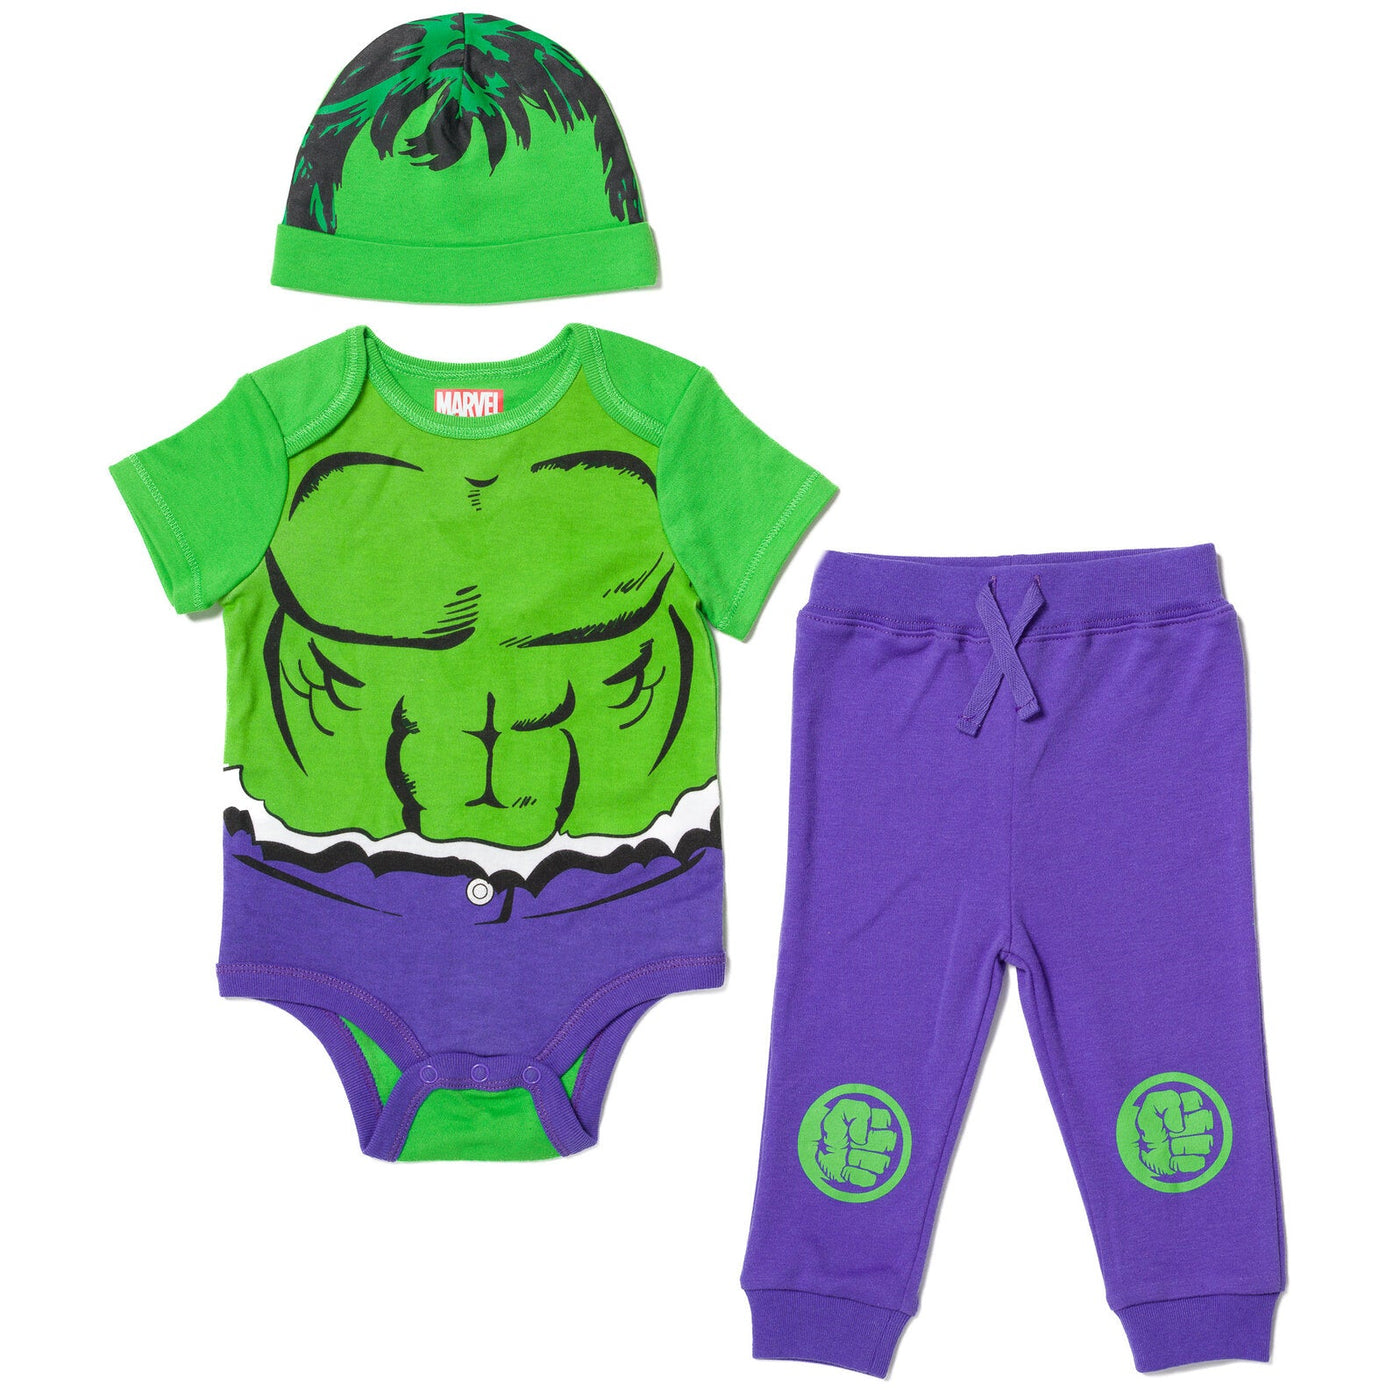 Marvel Avengers The Hulk Bodysuit Pants and Hat 3 Piece Outfit Set - imagikids